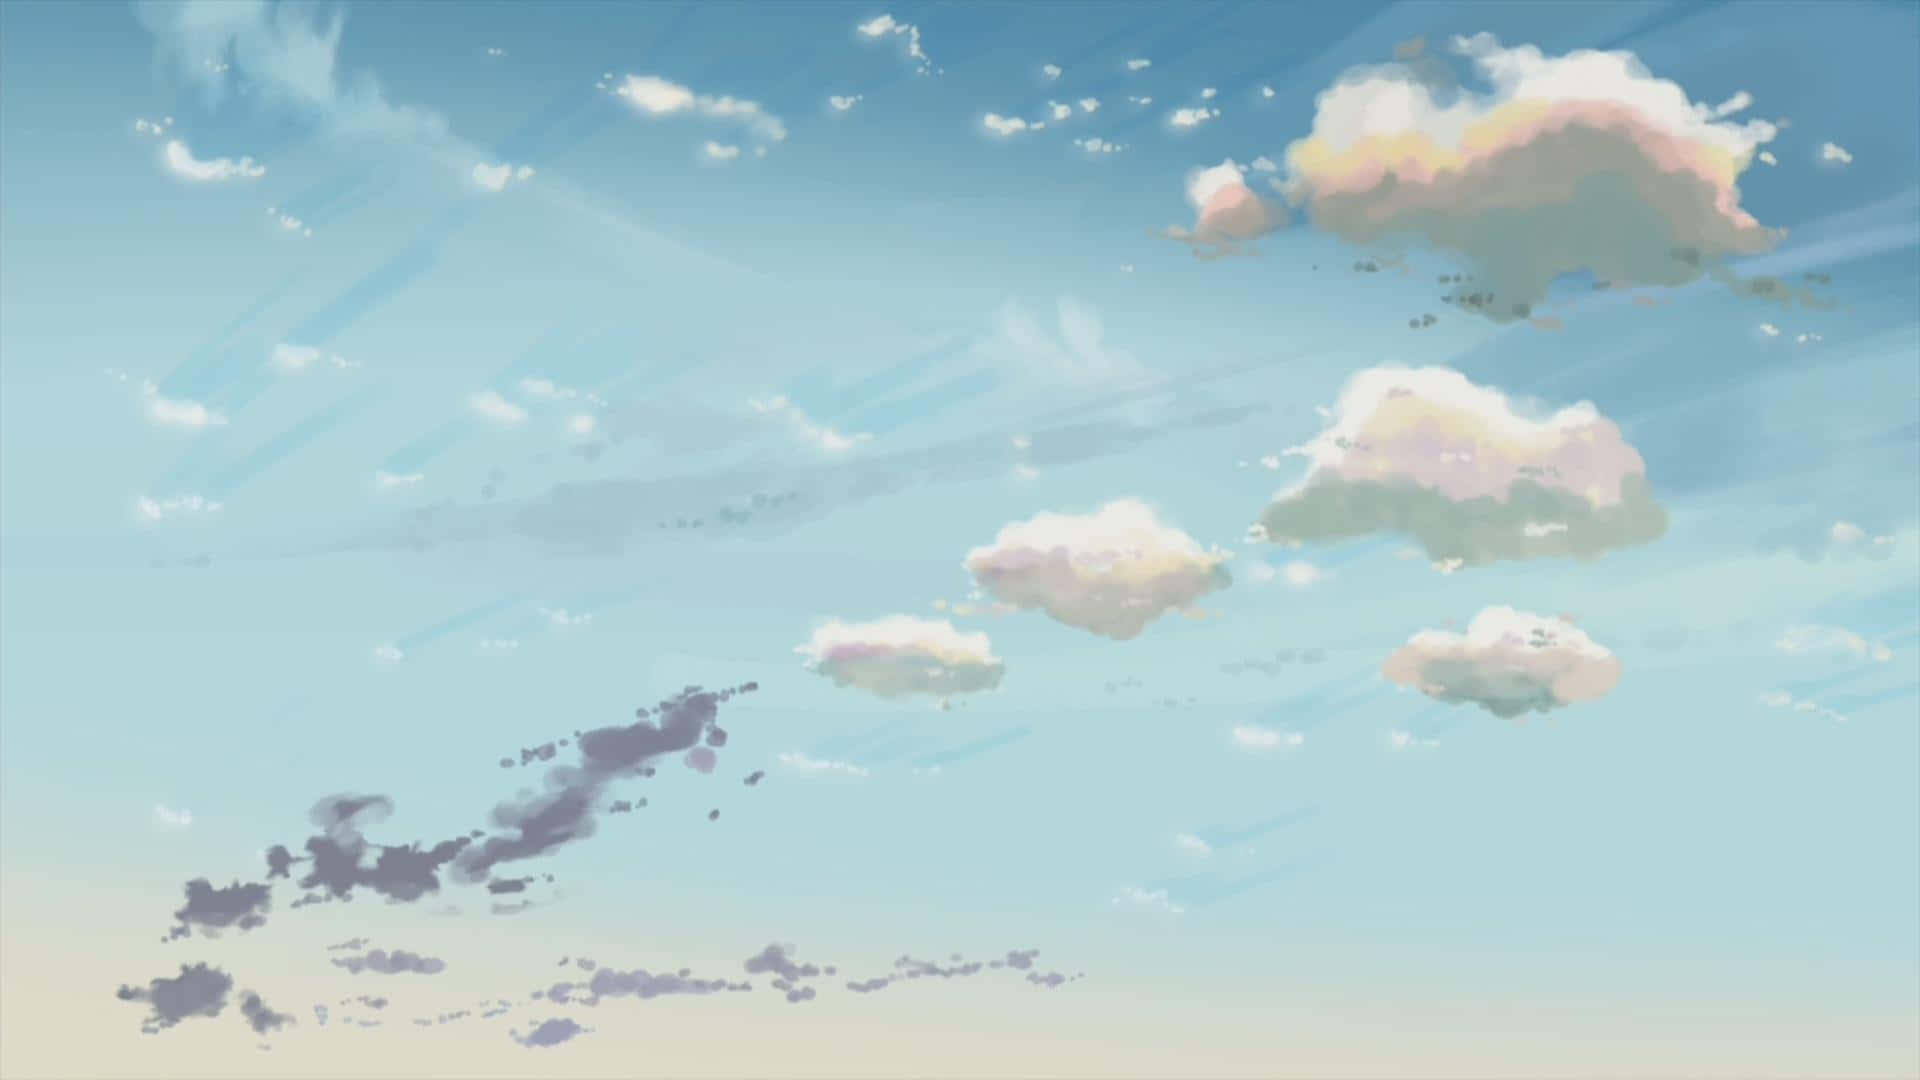 sky blue anime  widgetopia homescreen widgets for iPhone  iPad  Android